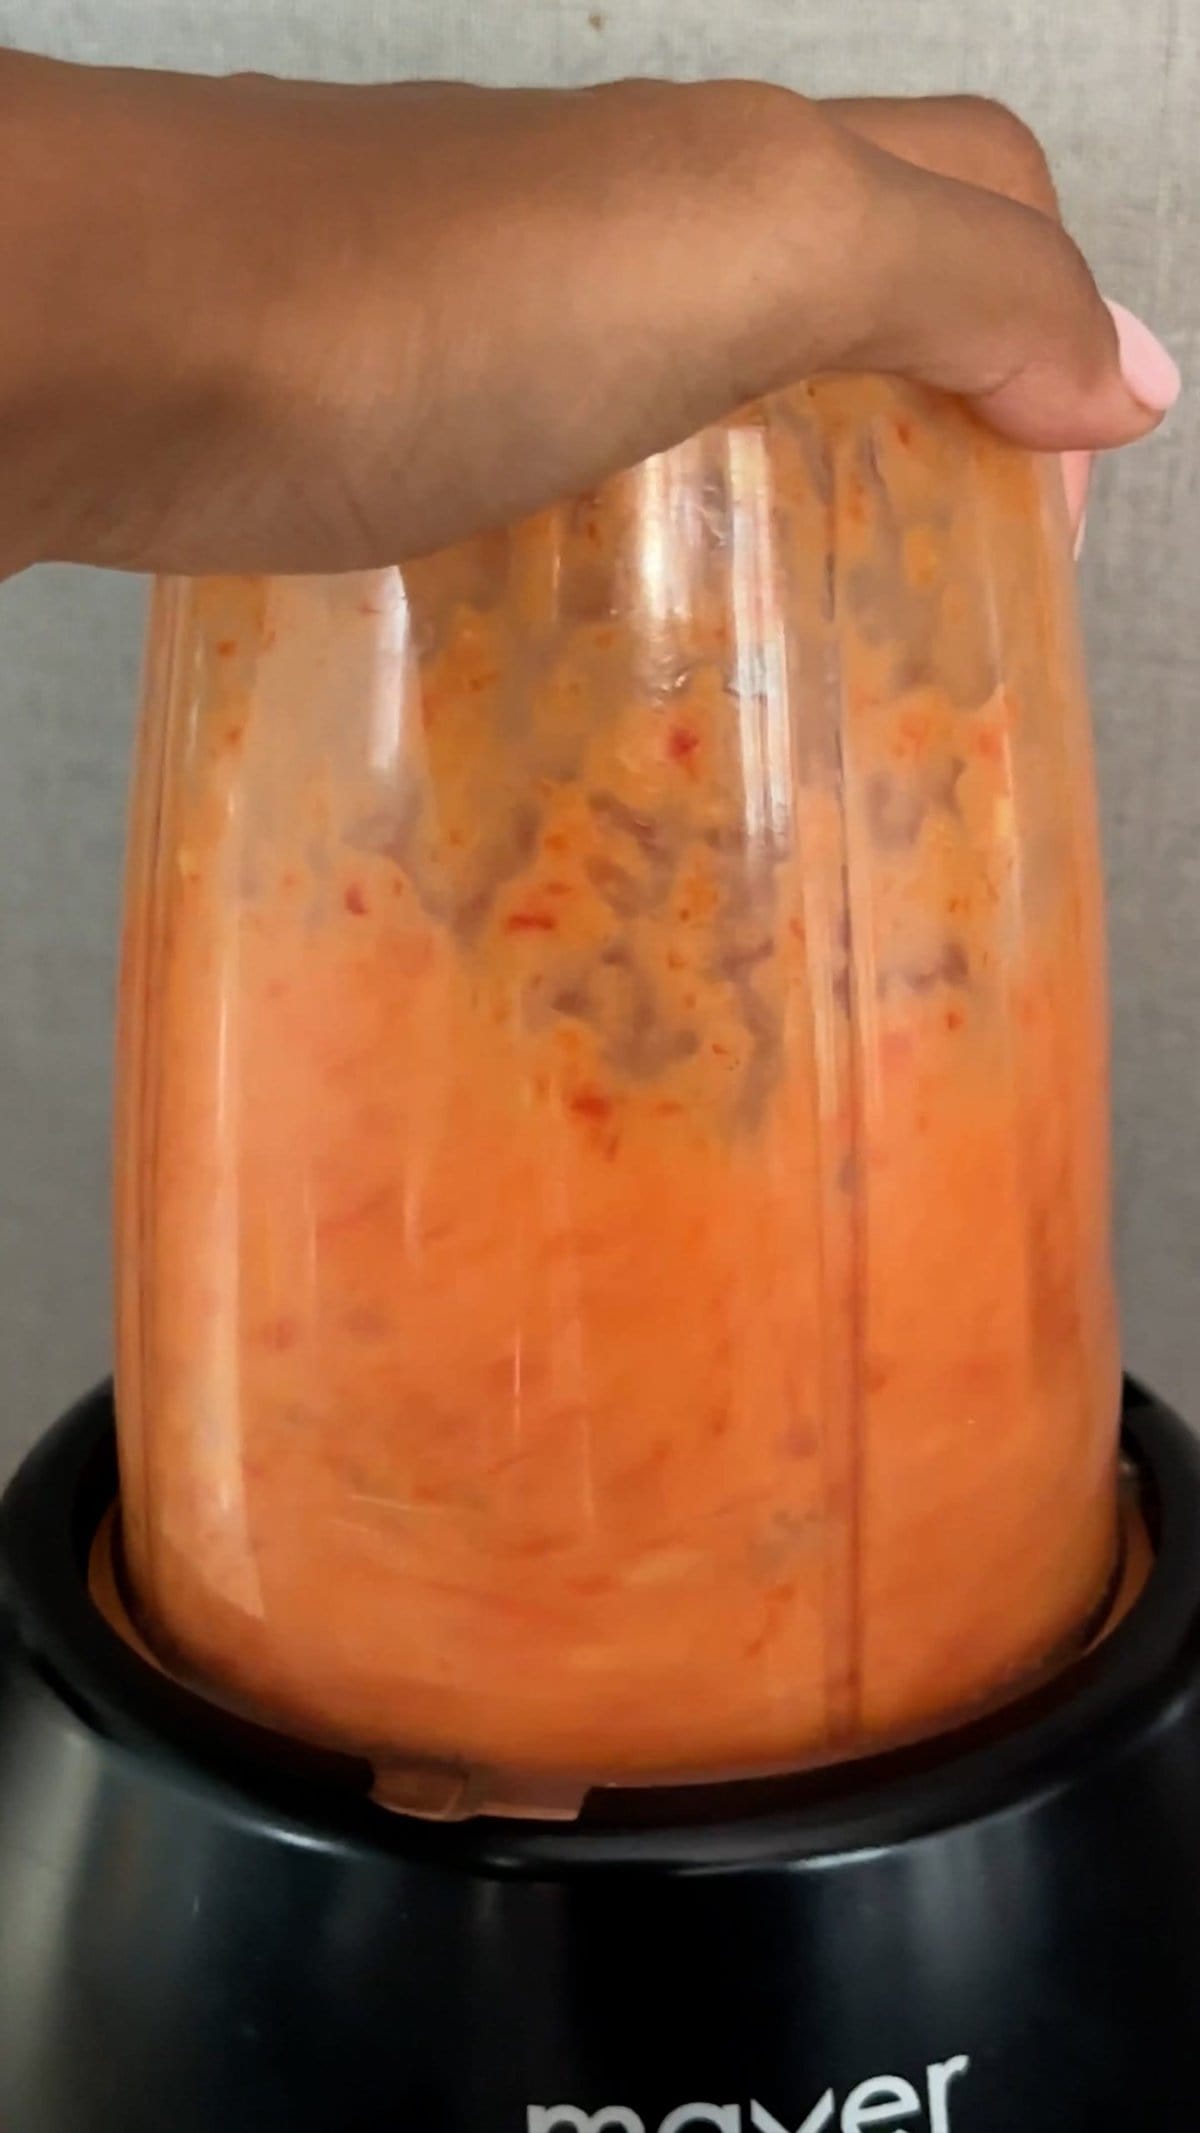 Make Chili Garlic Sauce